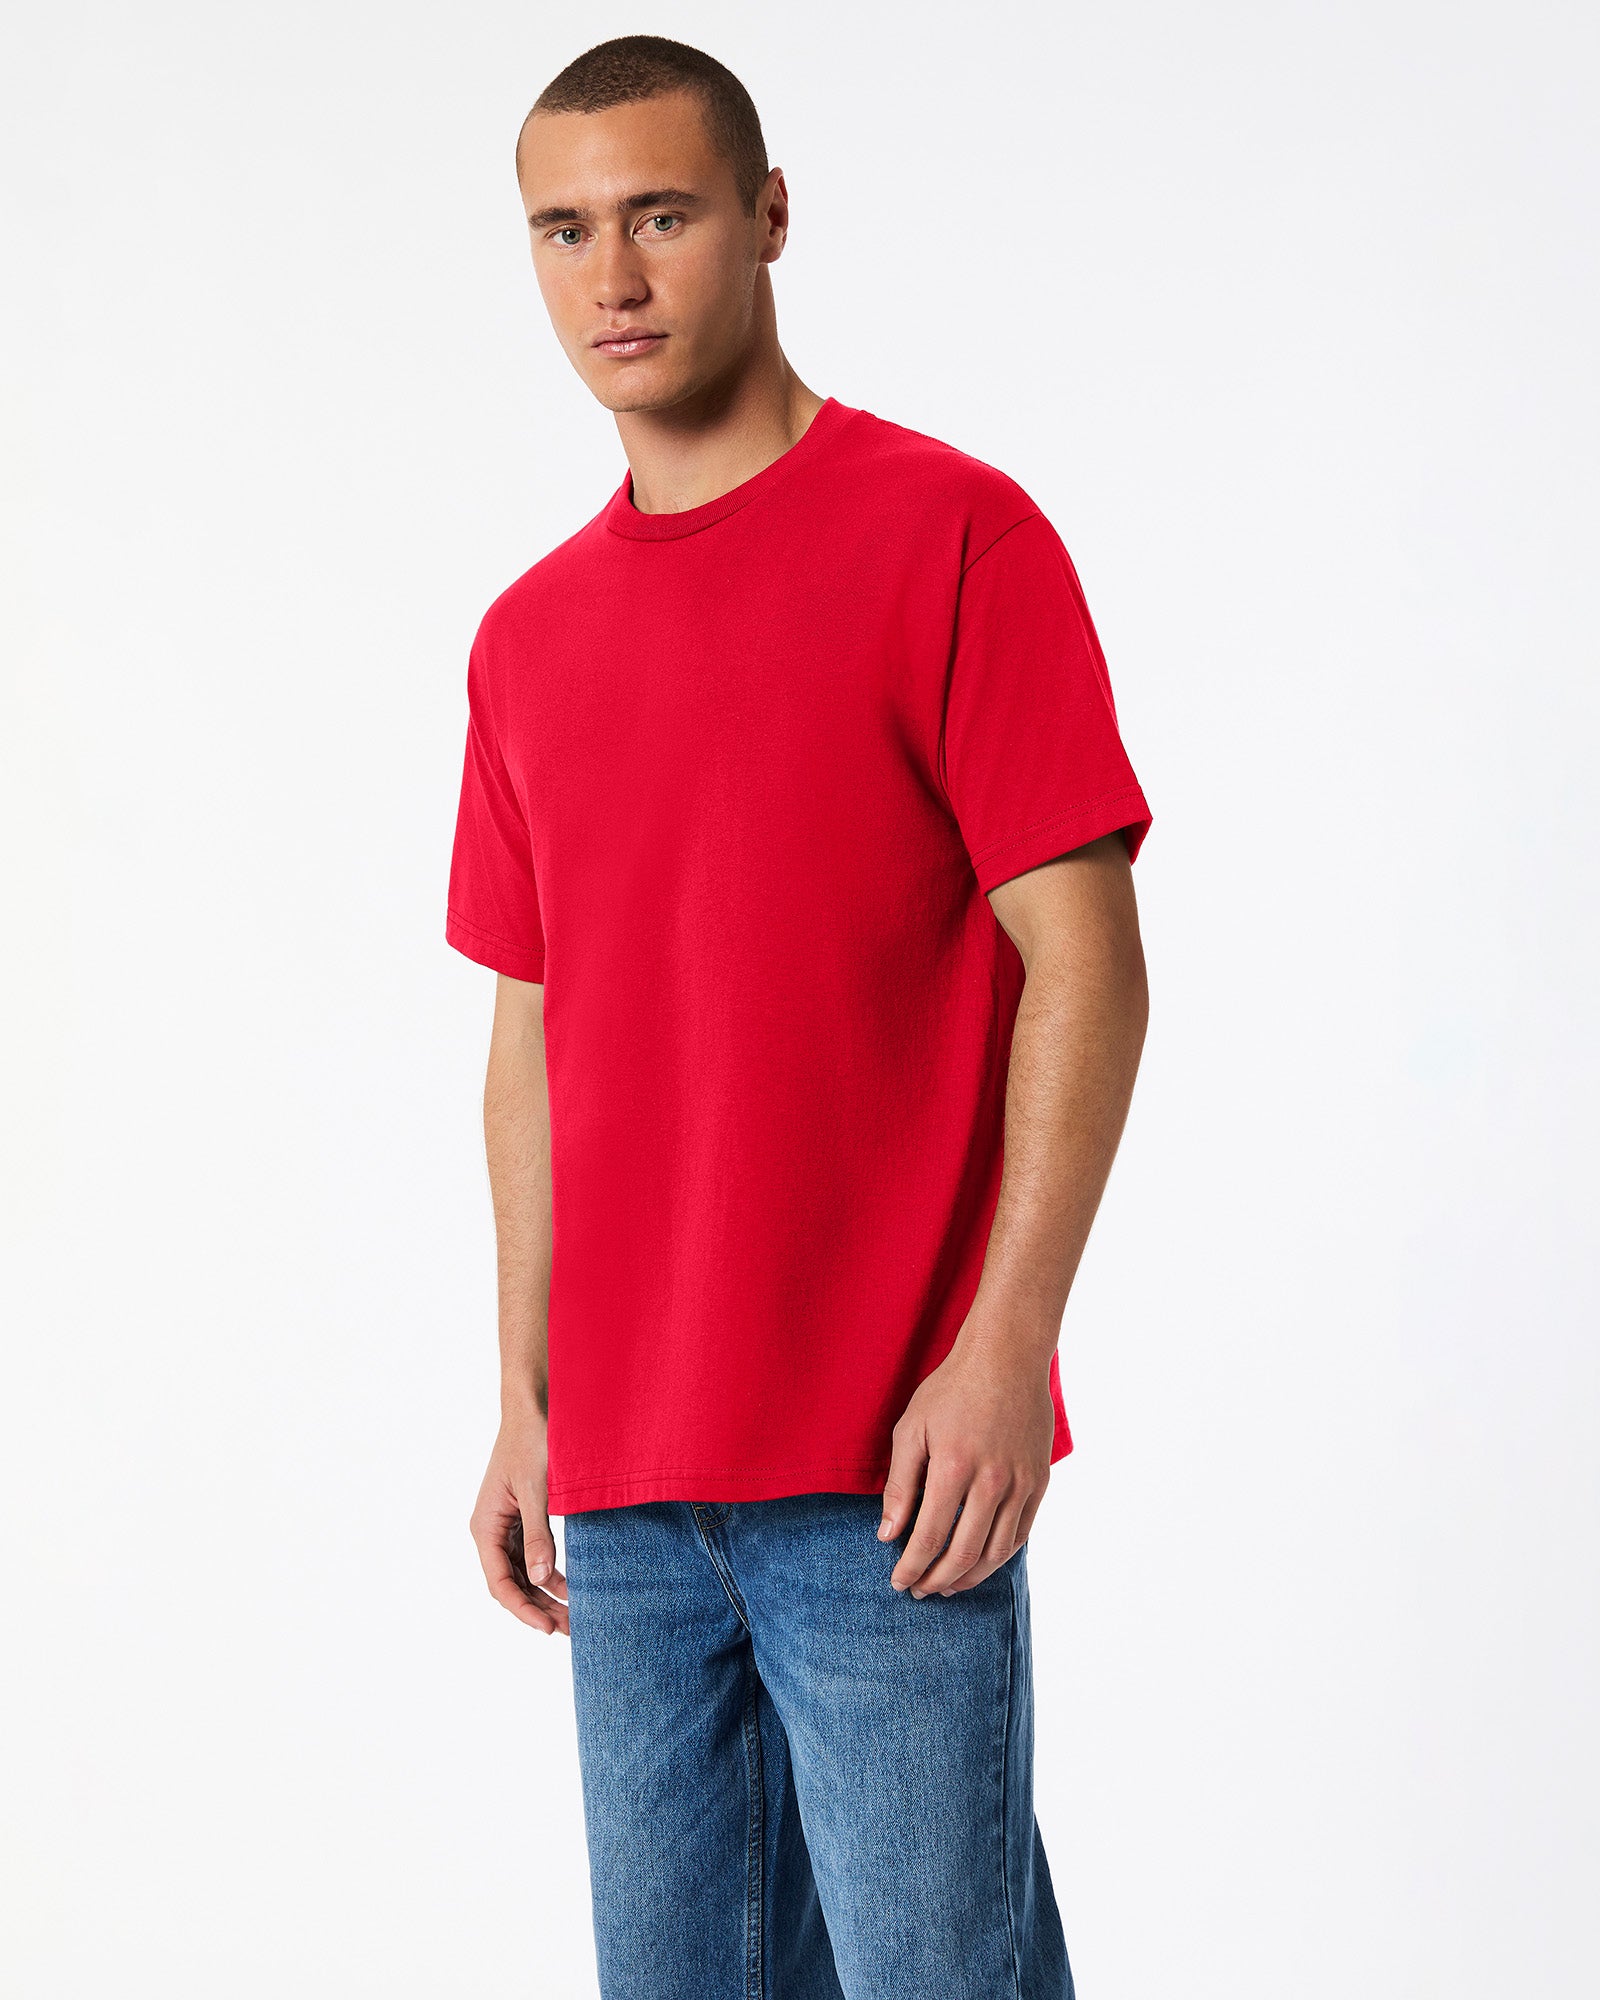 Heavyweight Unisex T-Shirt - Red